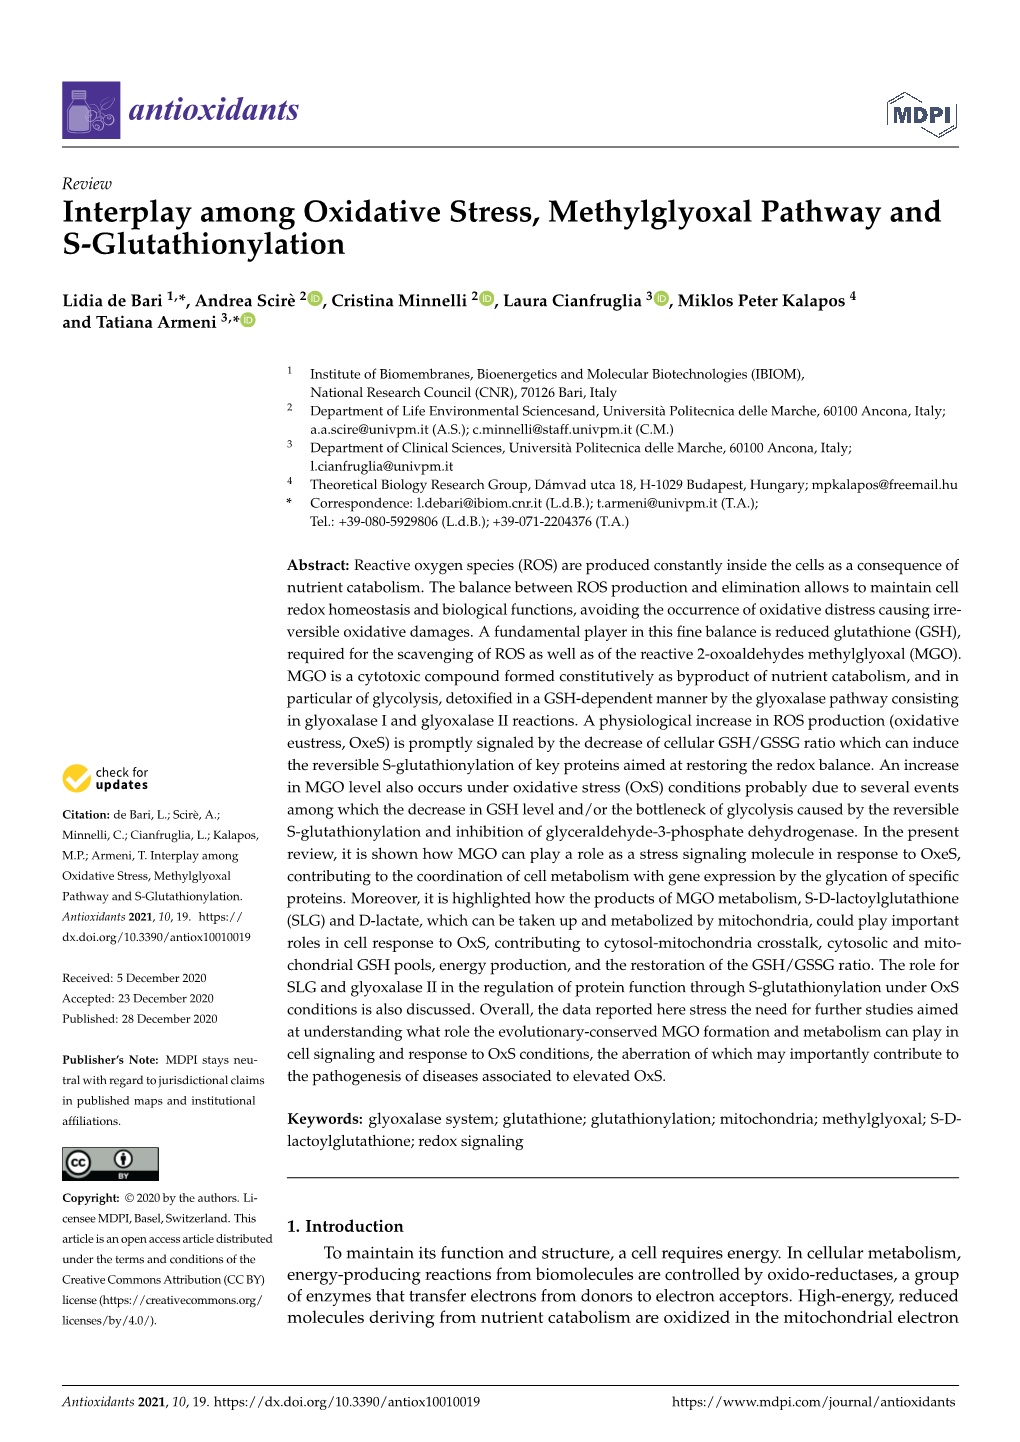 Interplay Among Oxidative Stress, Methylglyoxal Pathway and S-Glutathionylation